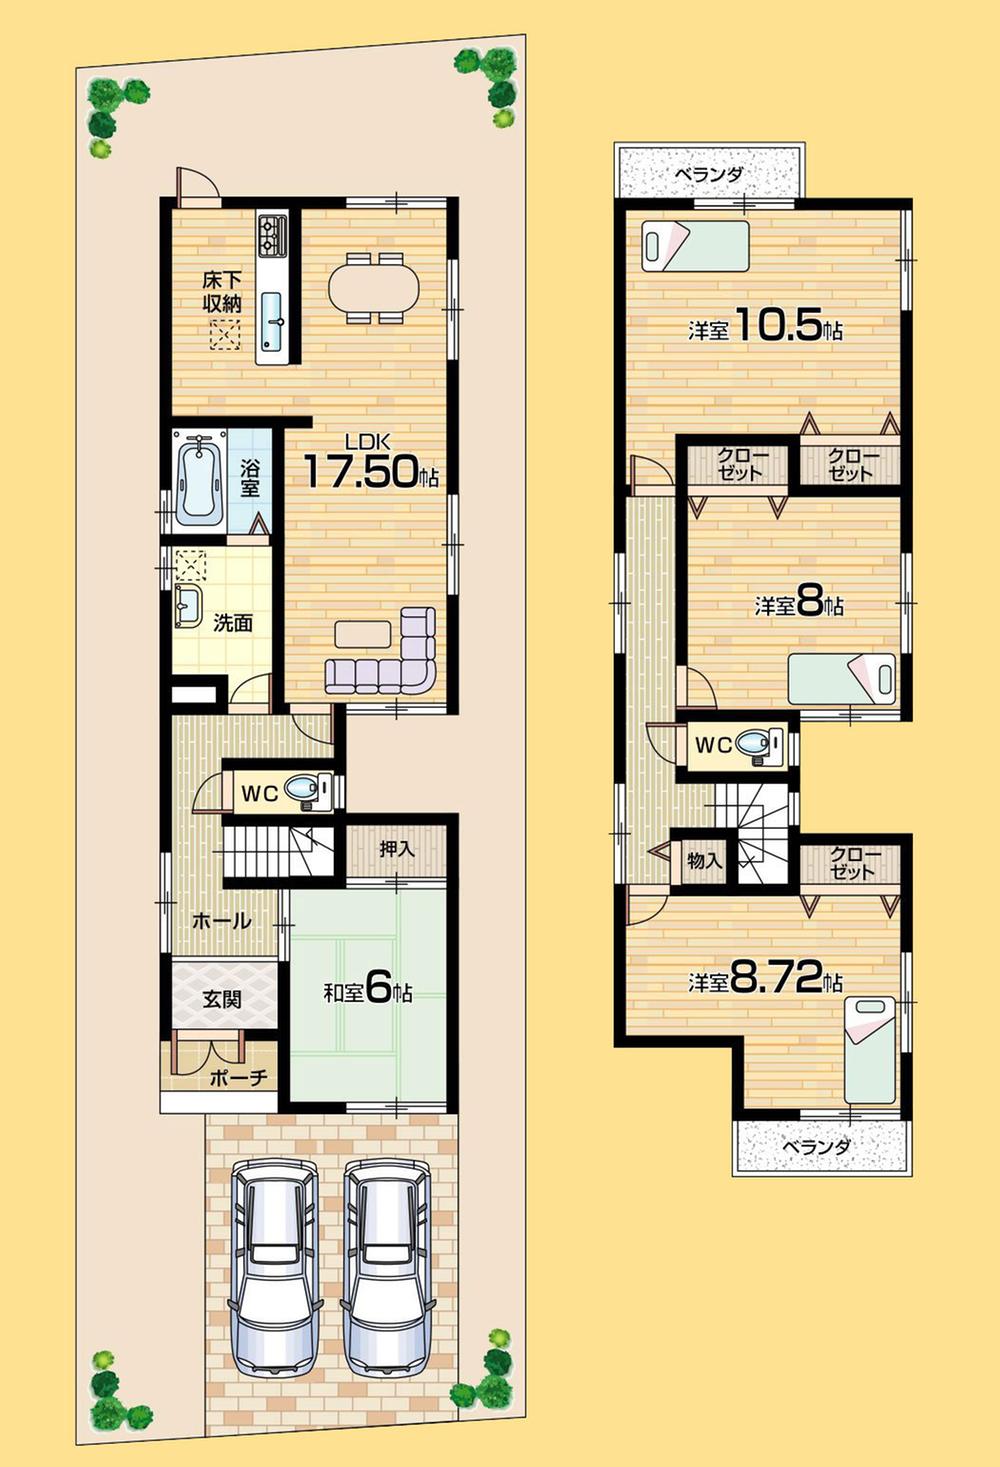 Floor plan. (No. 1 point), Price 24,700,000 yen, 4LDK, Land area 148.92 sq m , Building area 118.98 sq m